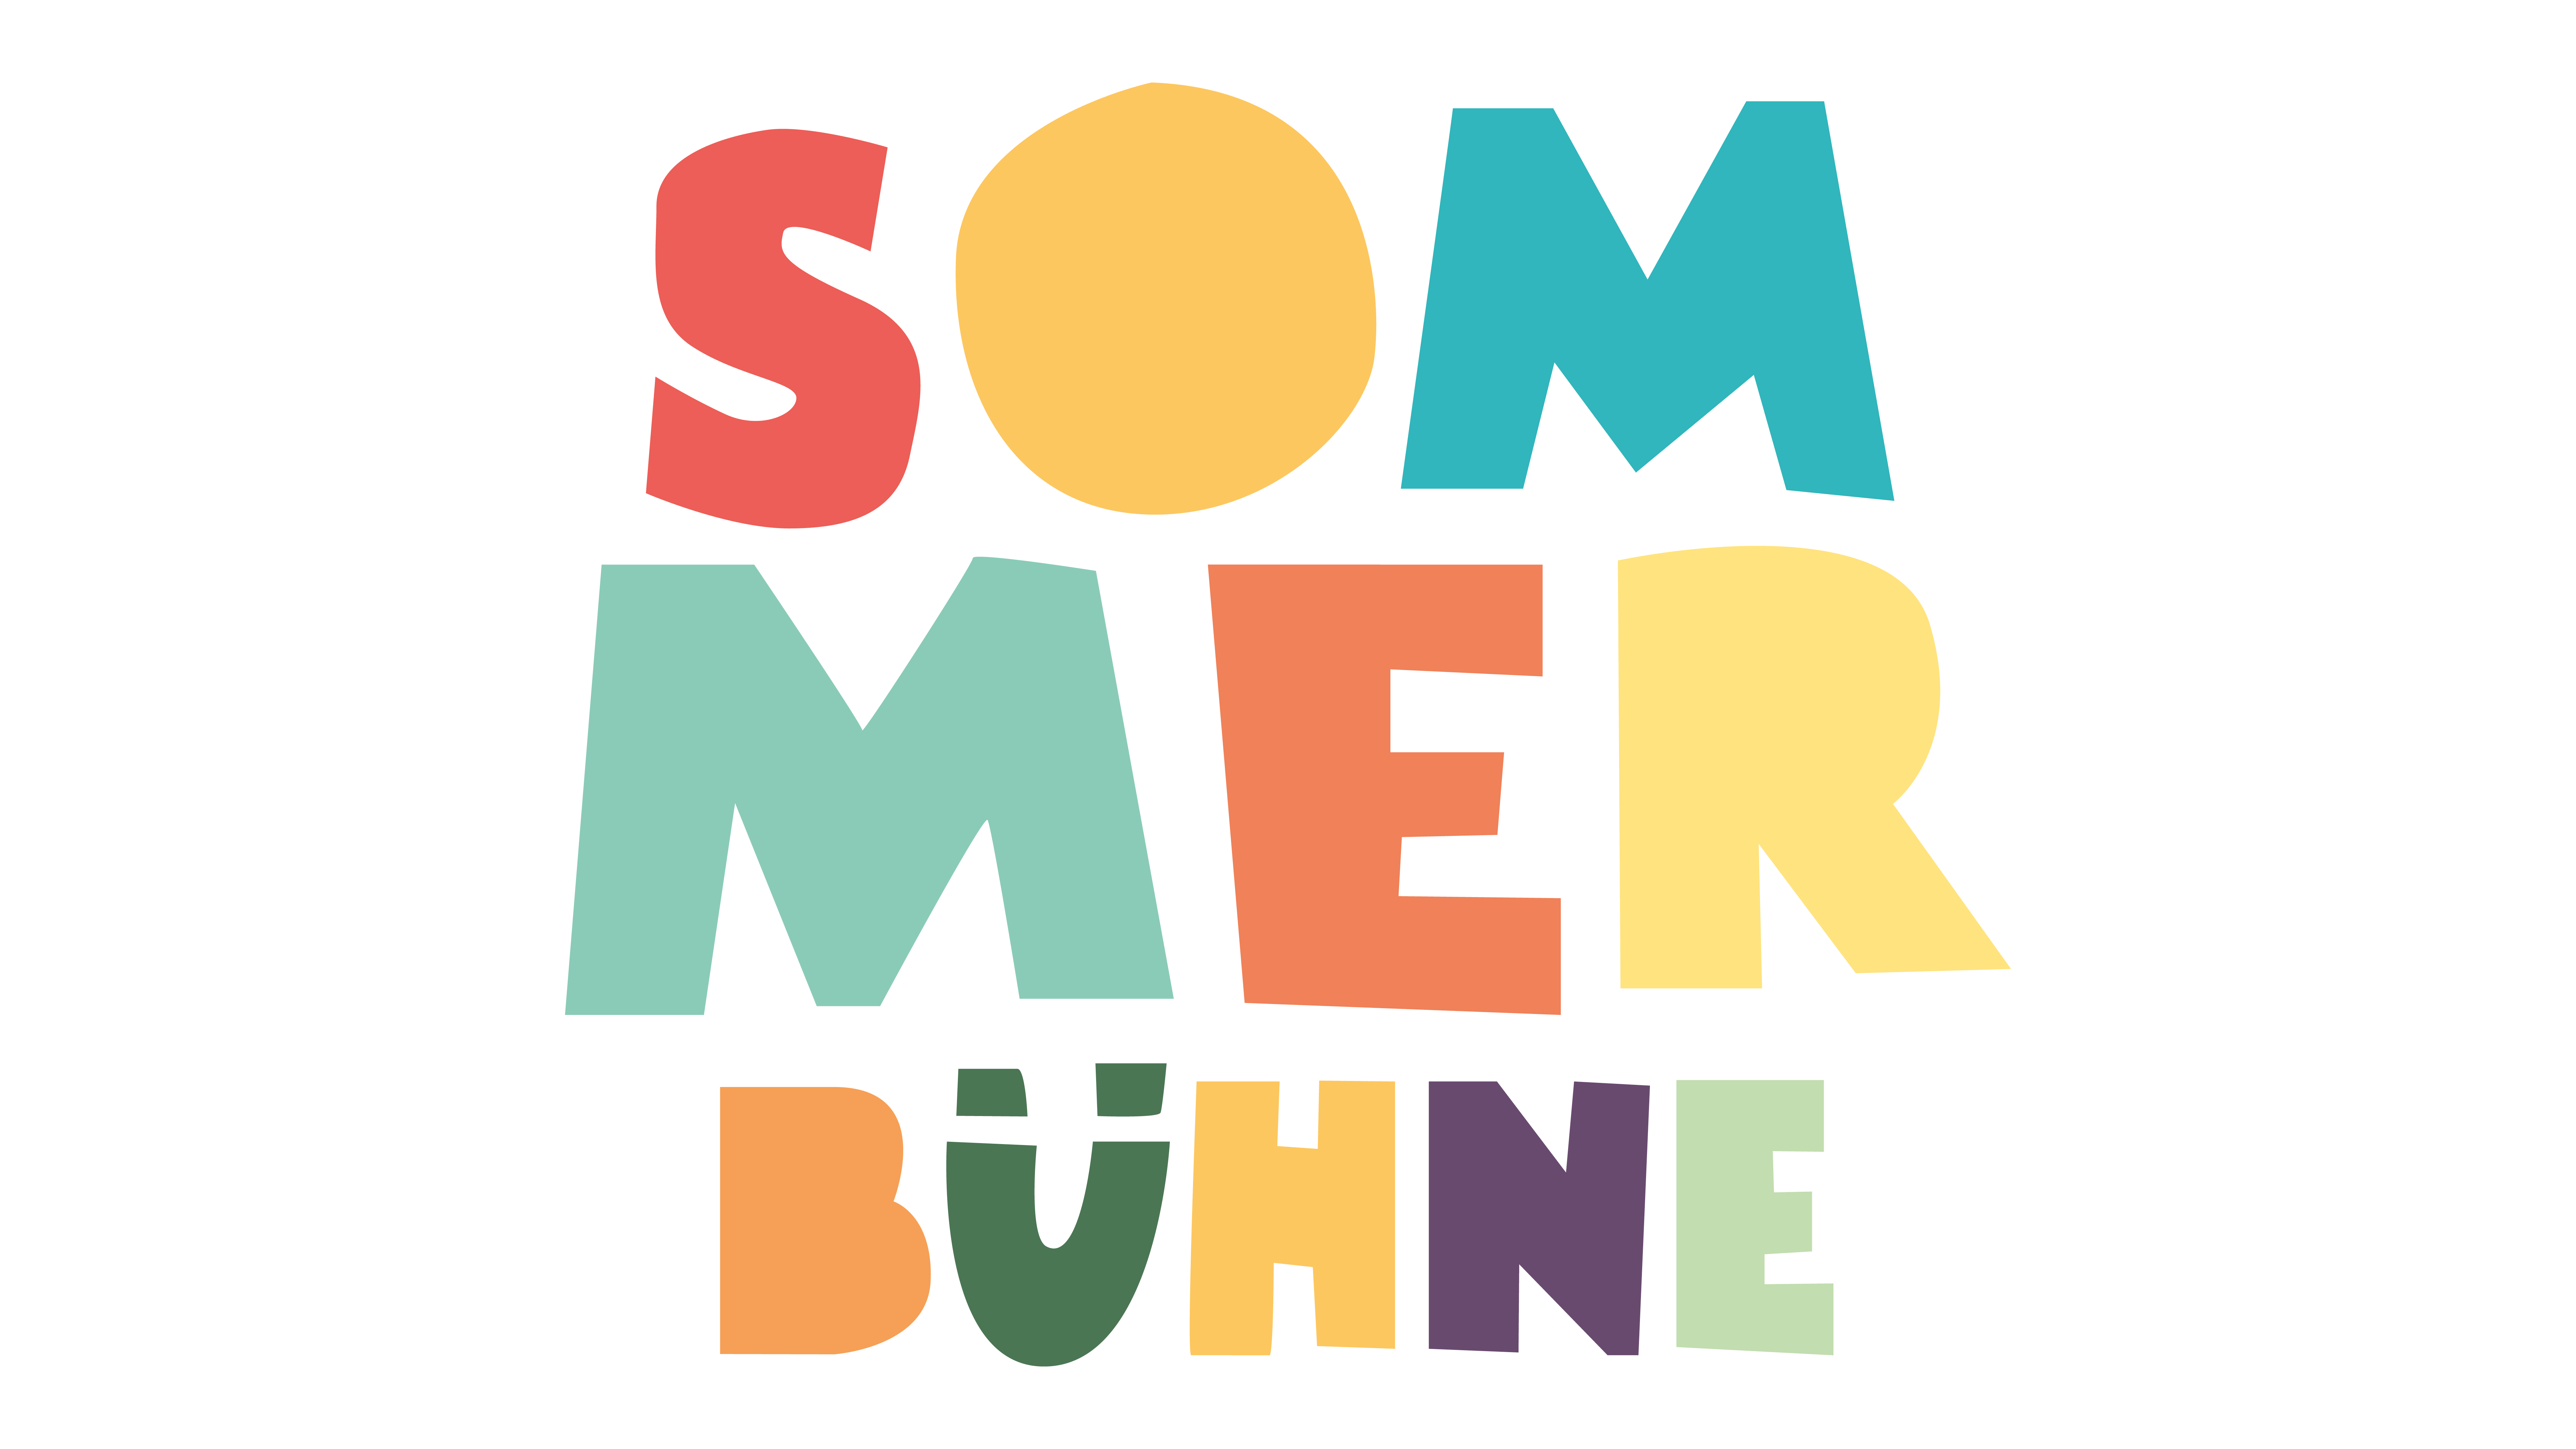 Sommerbuehne Referenz 22 Logo bunt